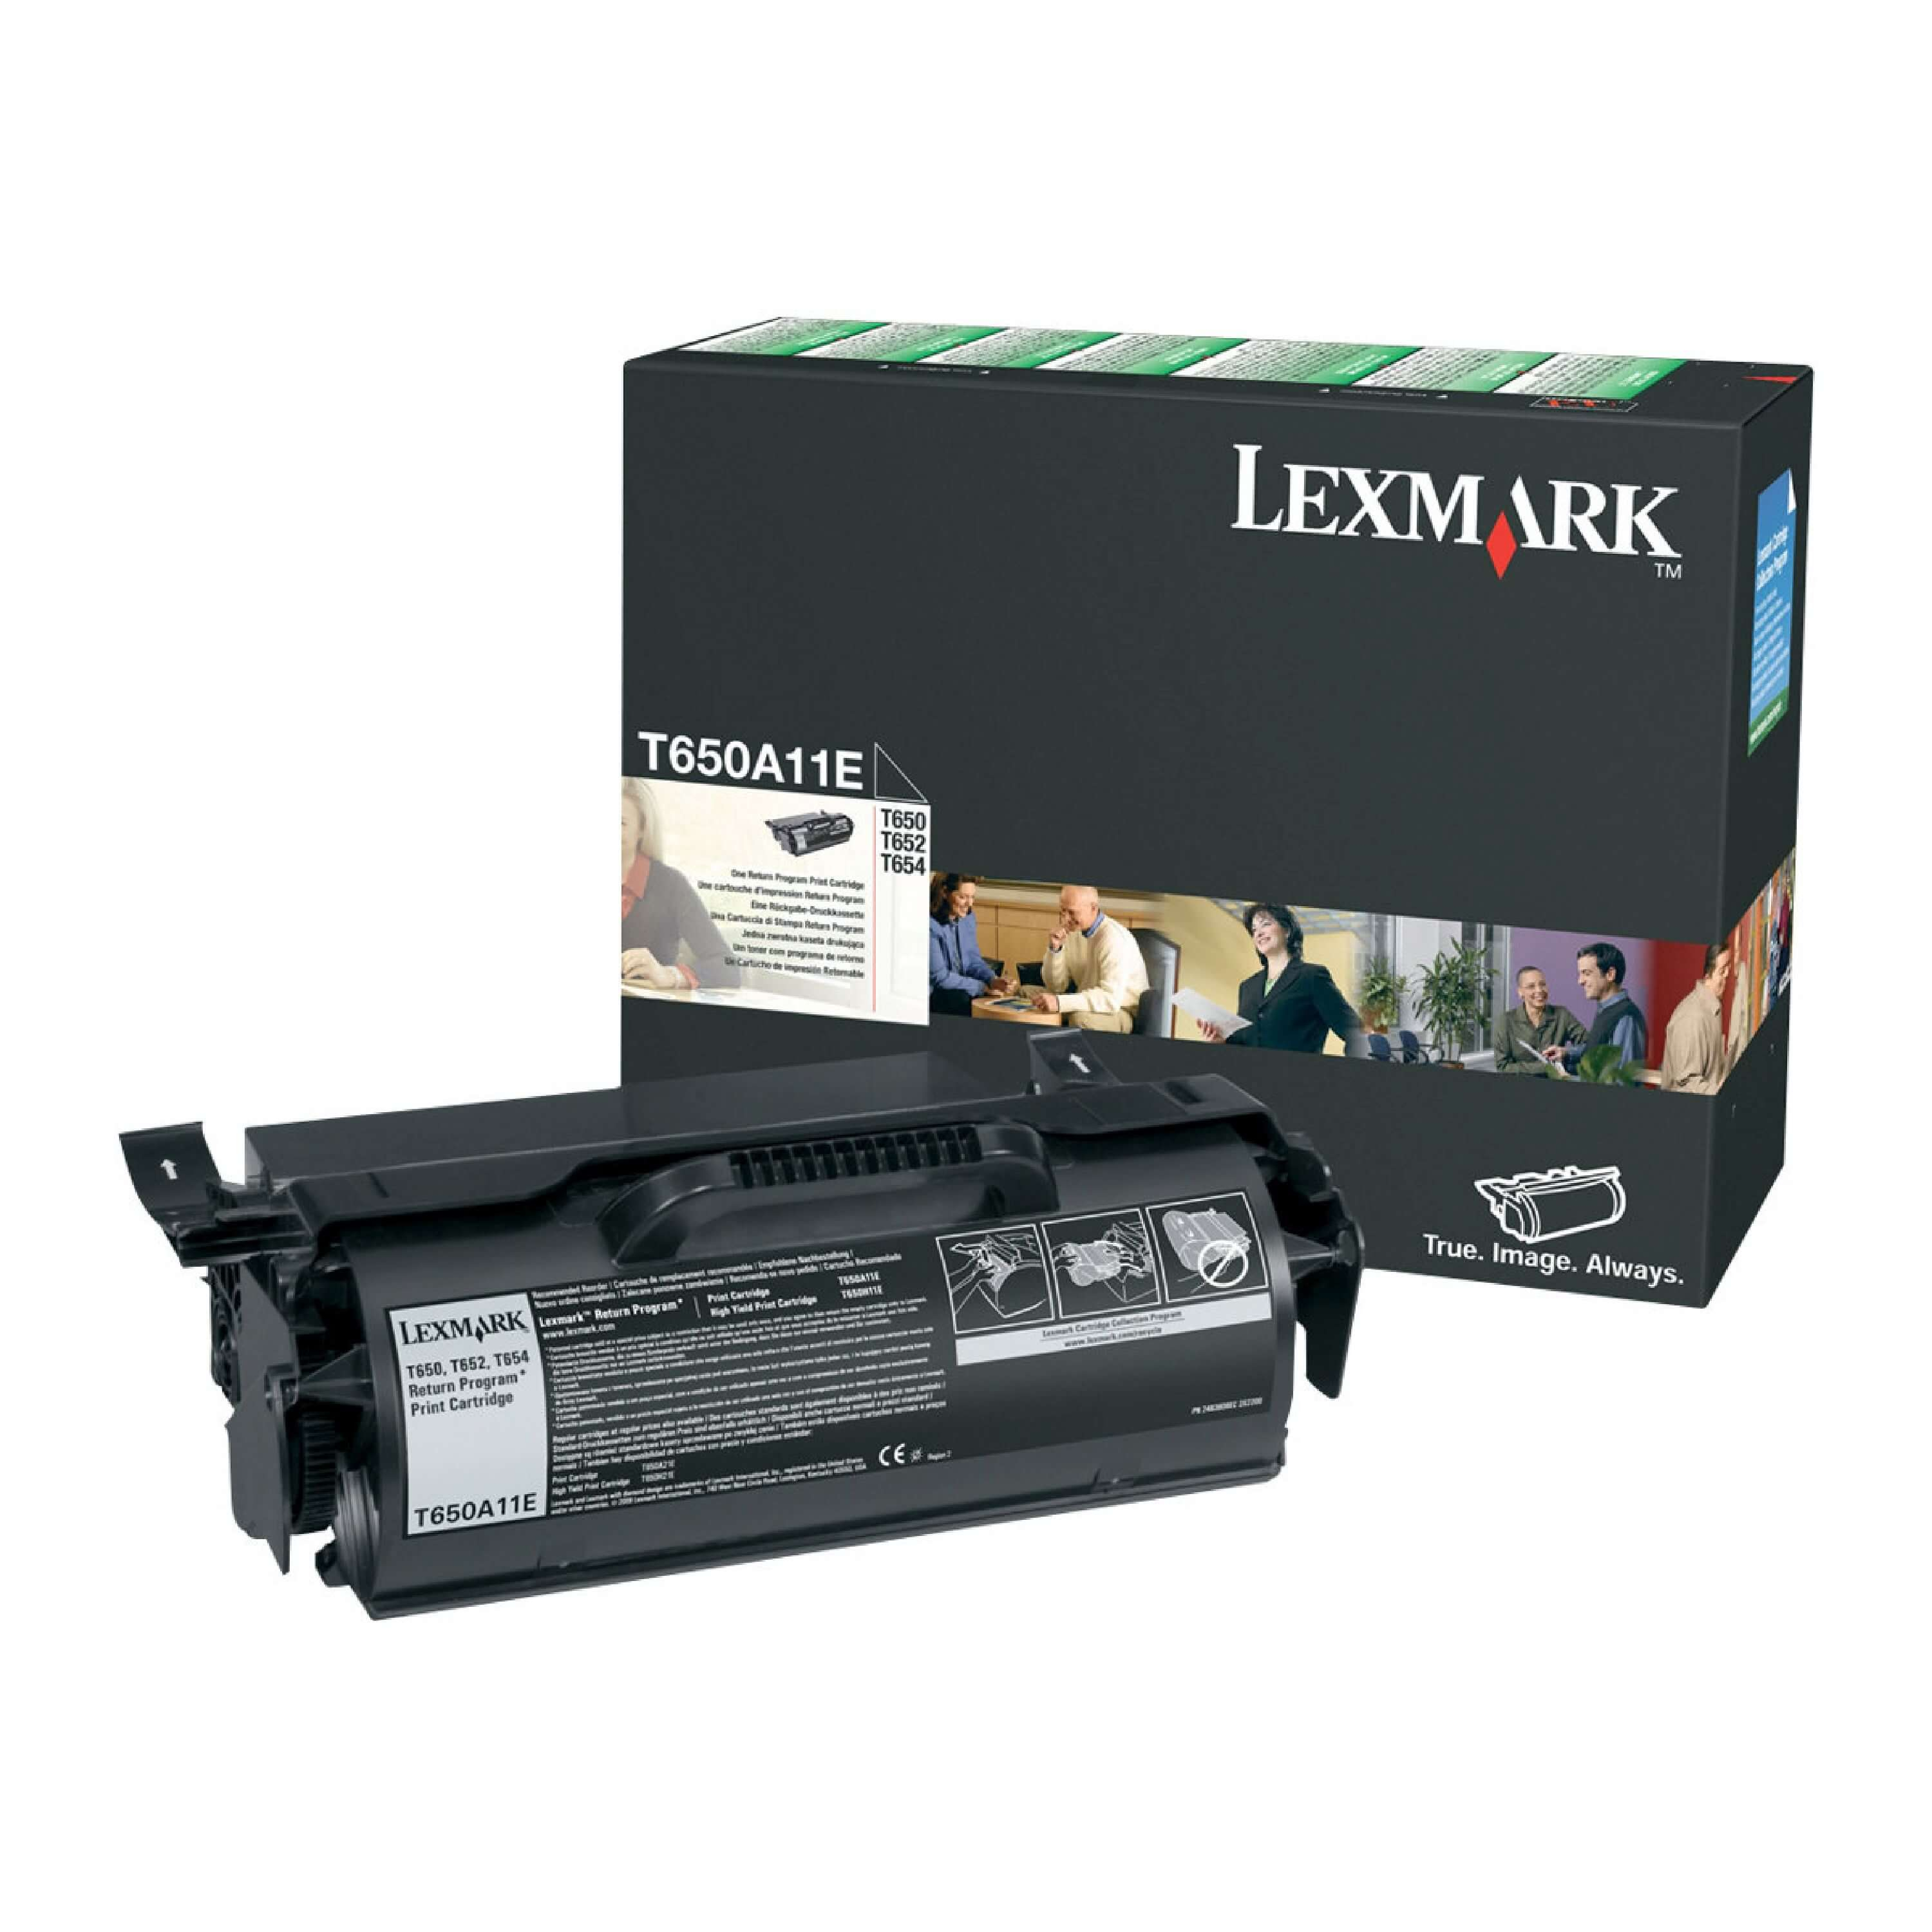 Original Toner Lexmark T 654 N (T650A11E)